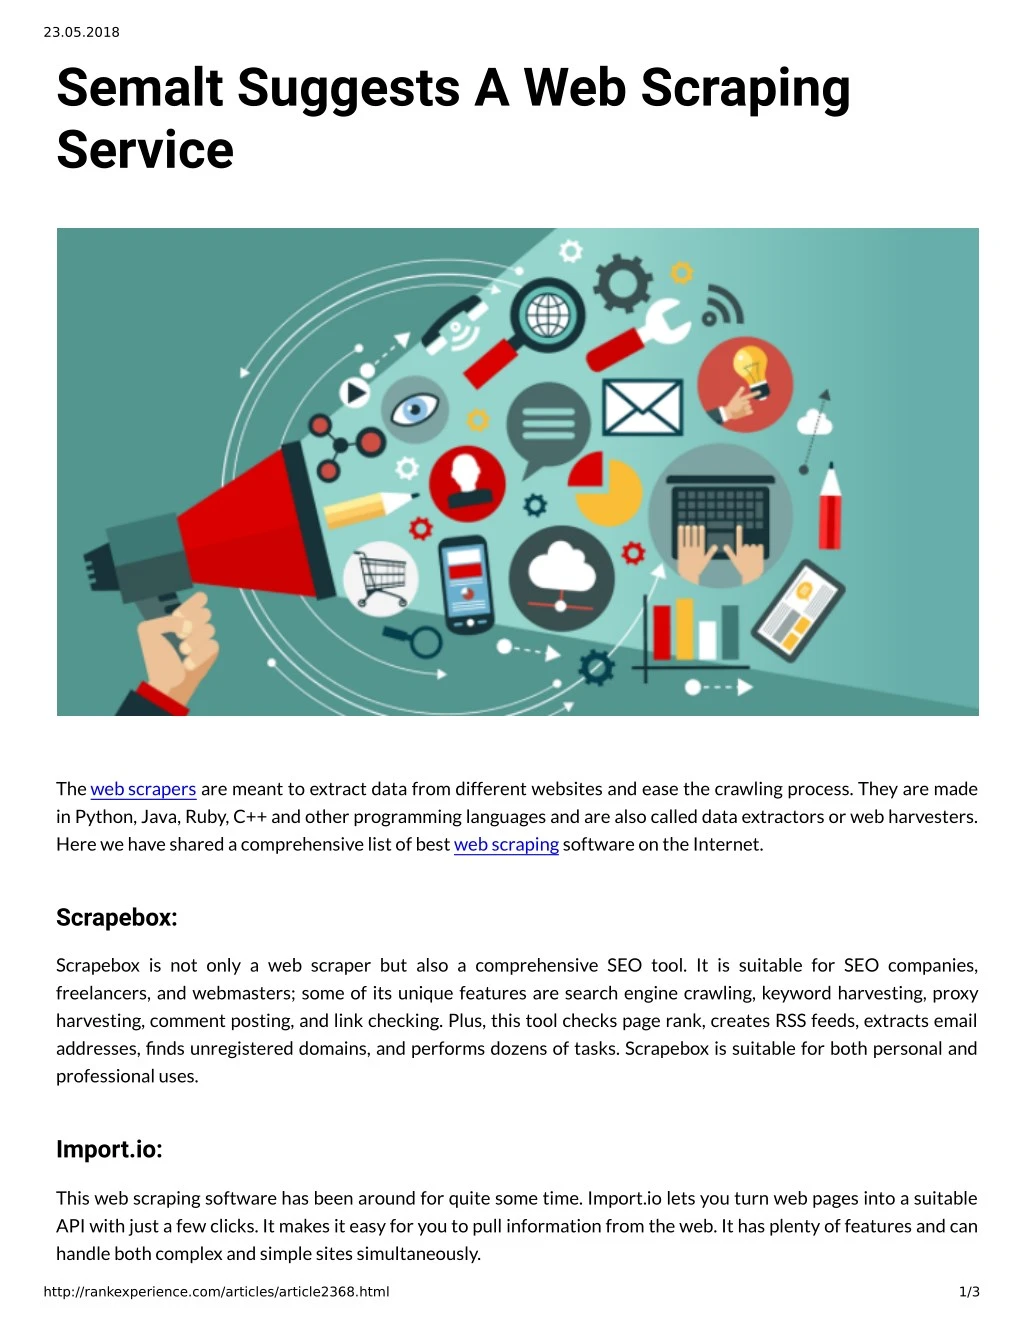 23 05 2018 semalt suggests a web scraping service